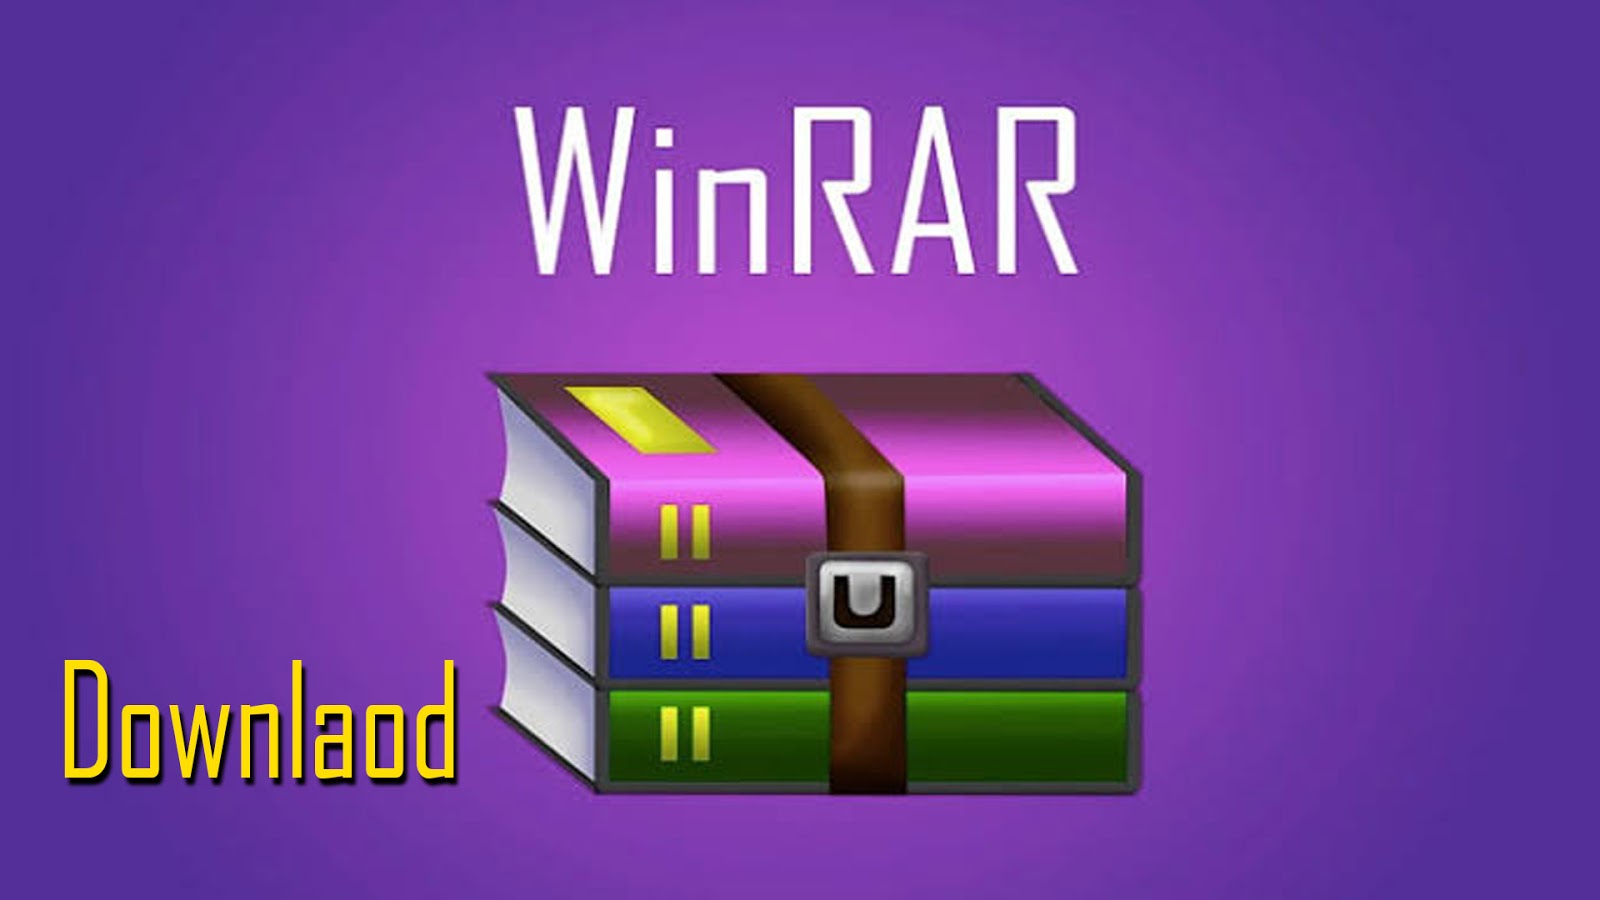 winrar download for windows 8 64 bit free